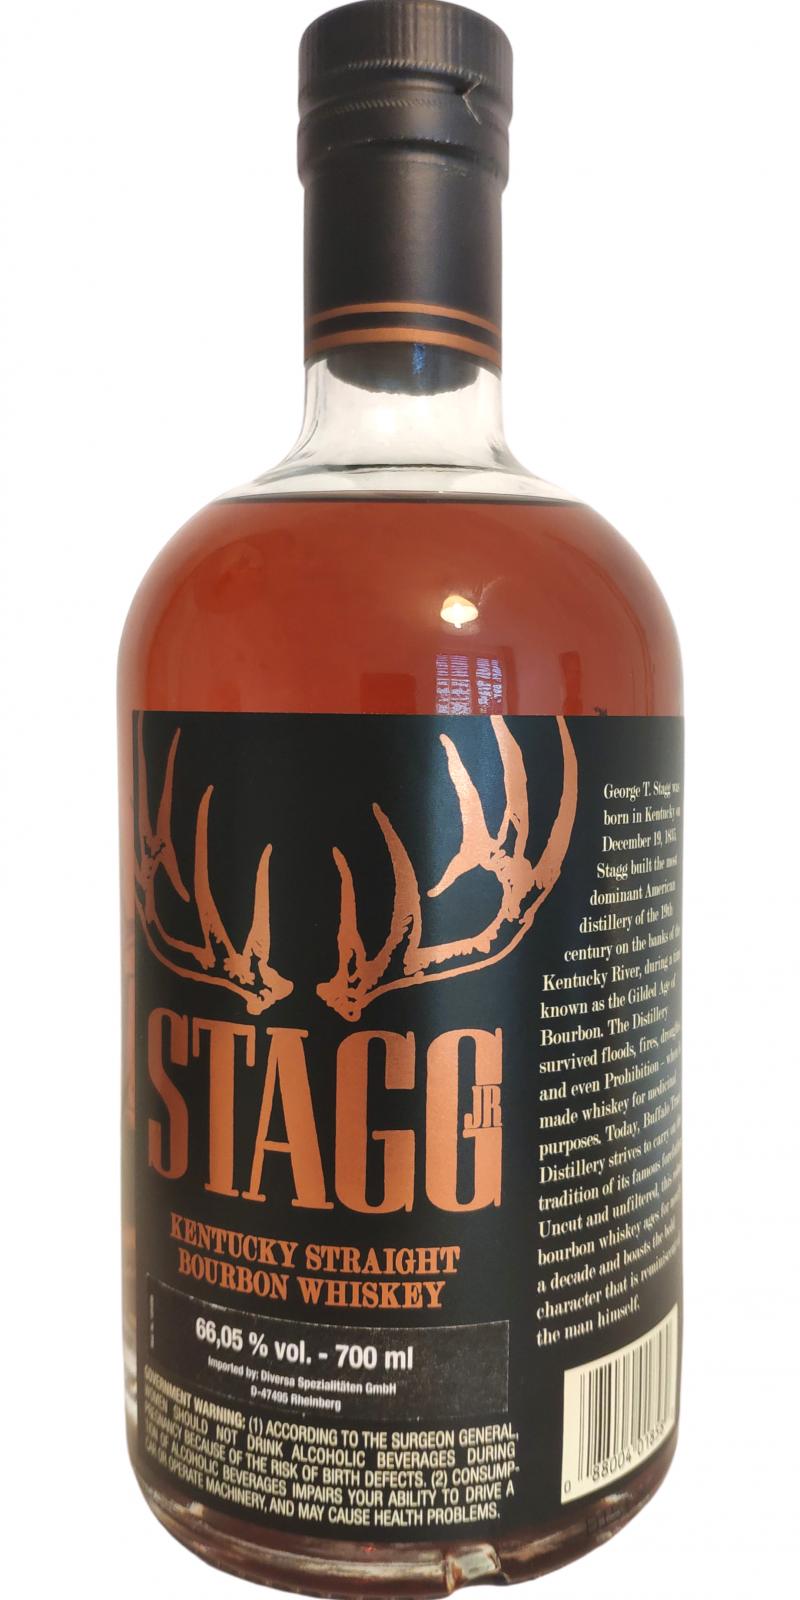 Stagg Jr. Kentucky Straight Bourbon Whisky 66.05% 700ml